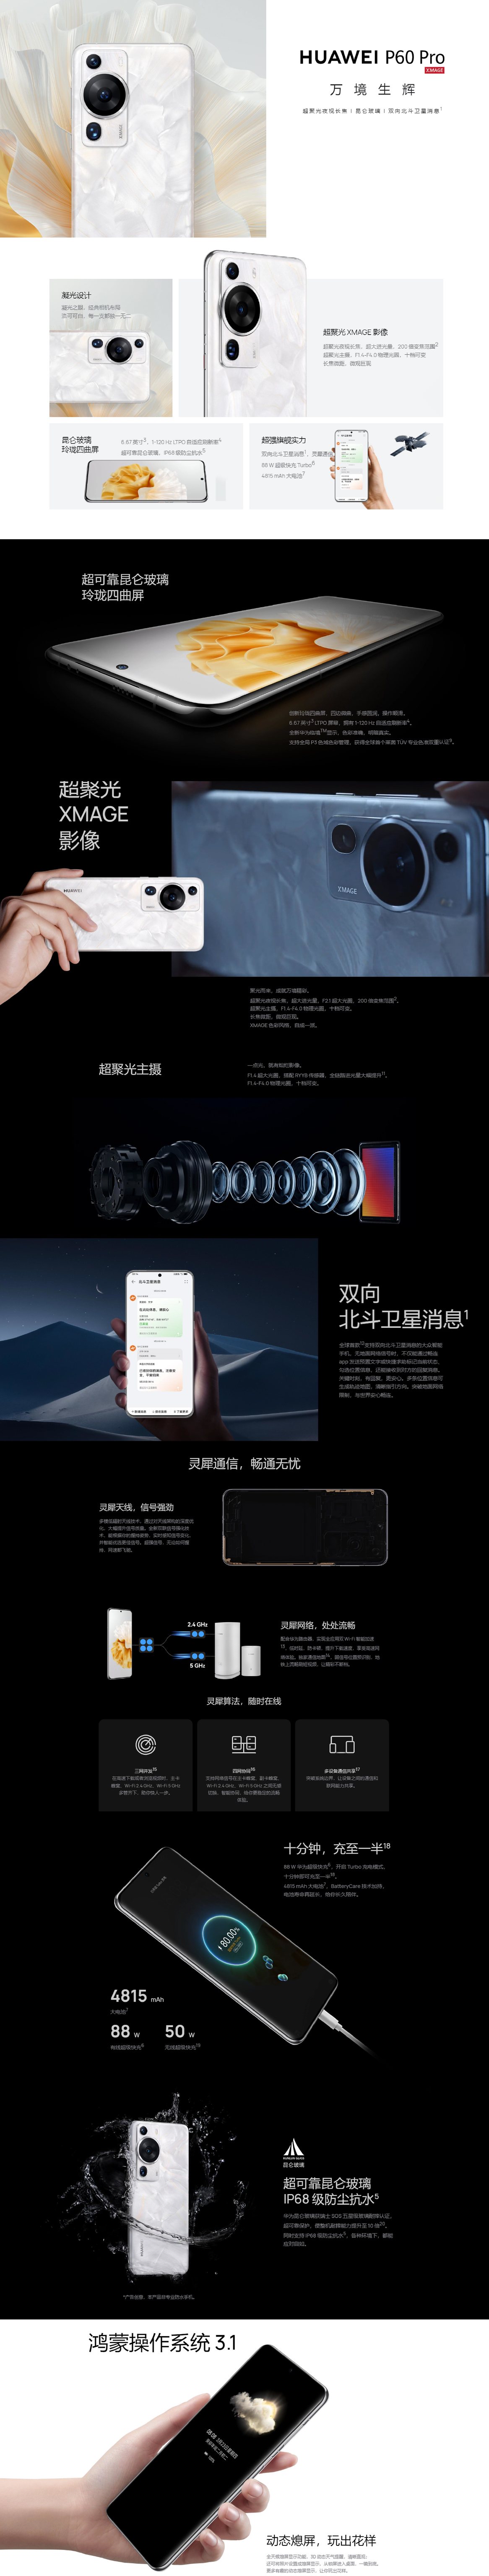 Huawei P60 Pro 4G